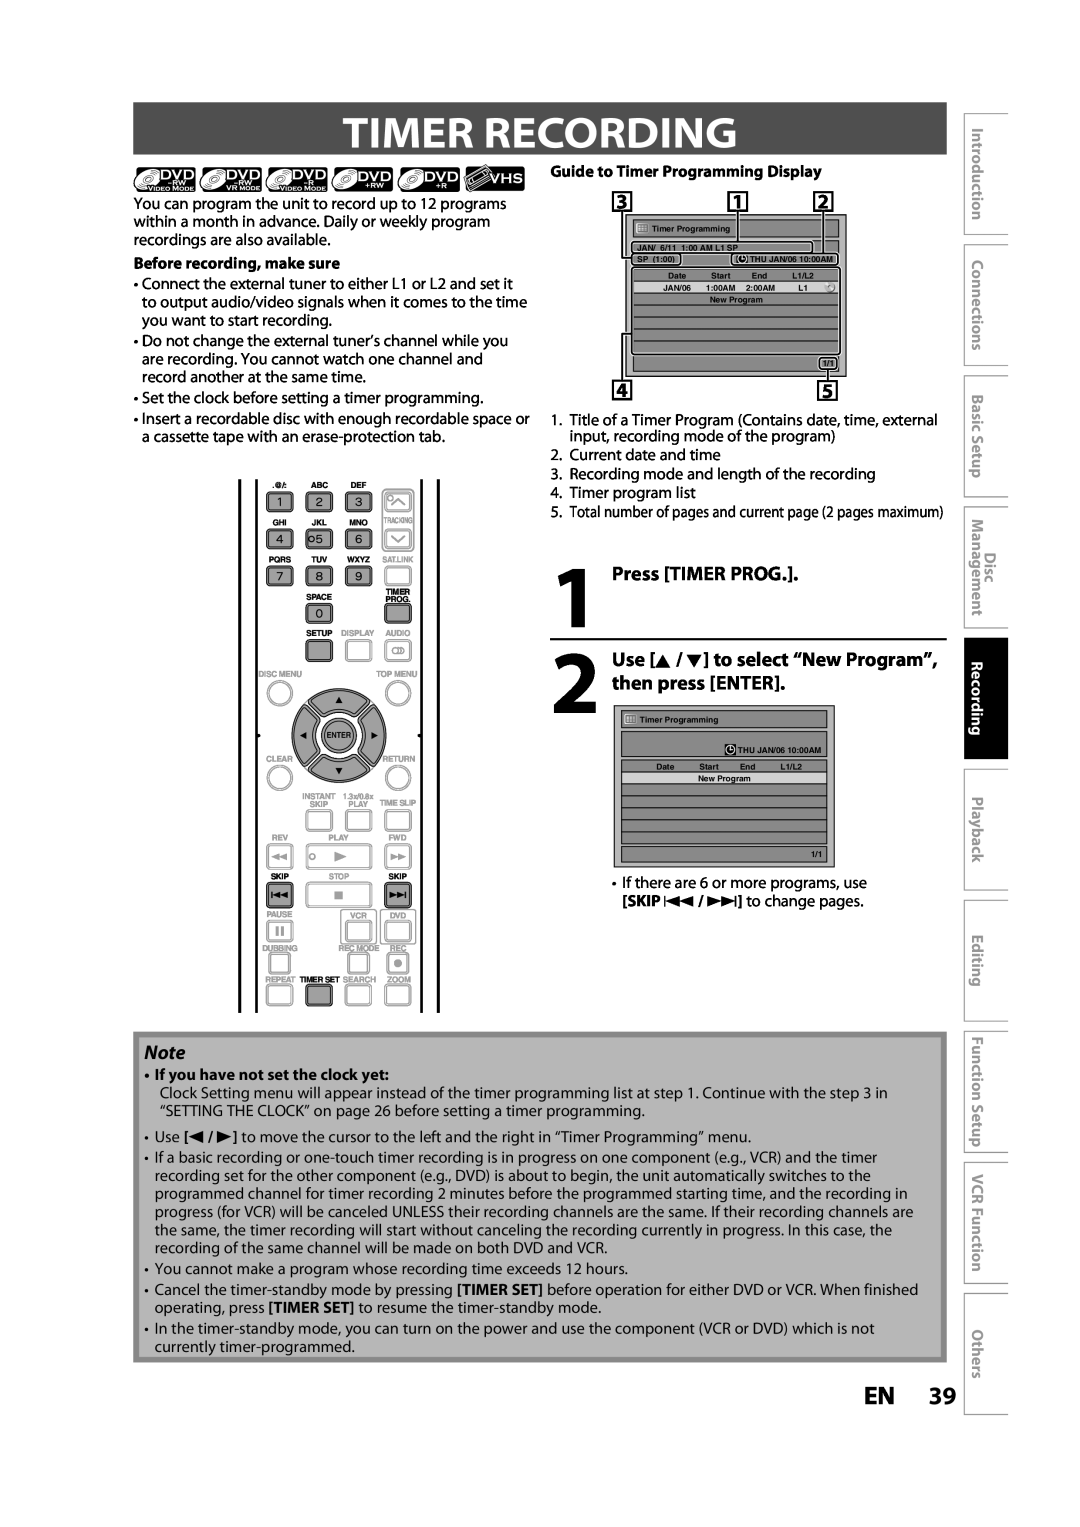 Toshiba DVR620KC Timer Recording, Press TIMER PROG, Use K / L to select “New Program”, Before recording, make sure 